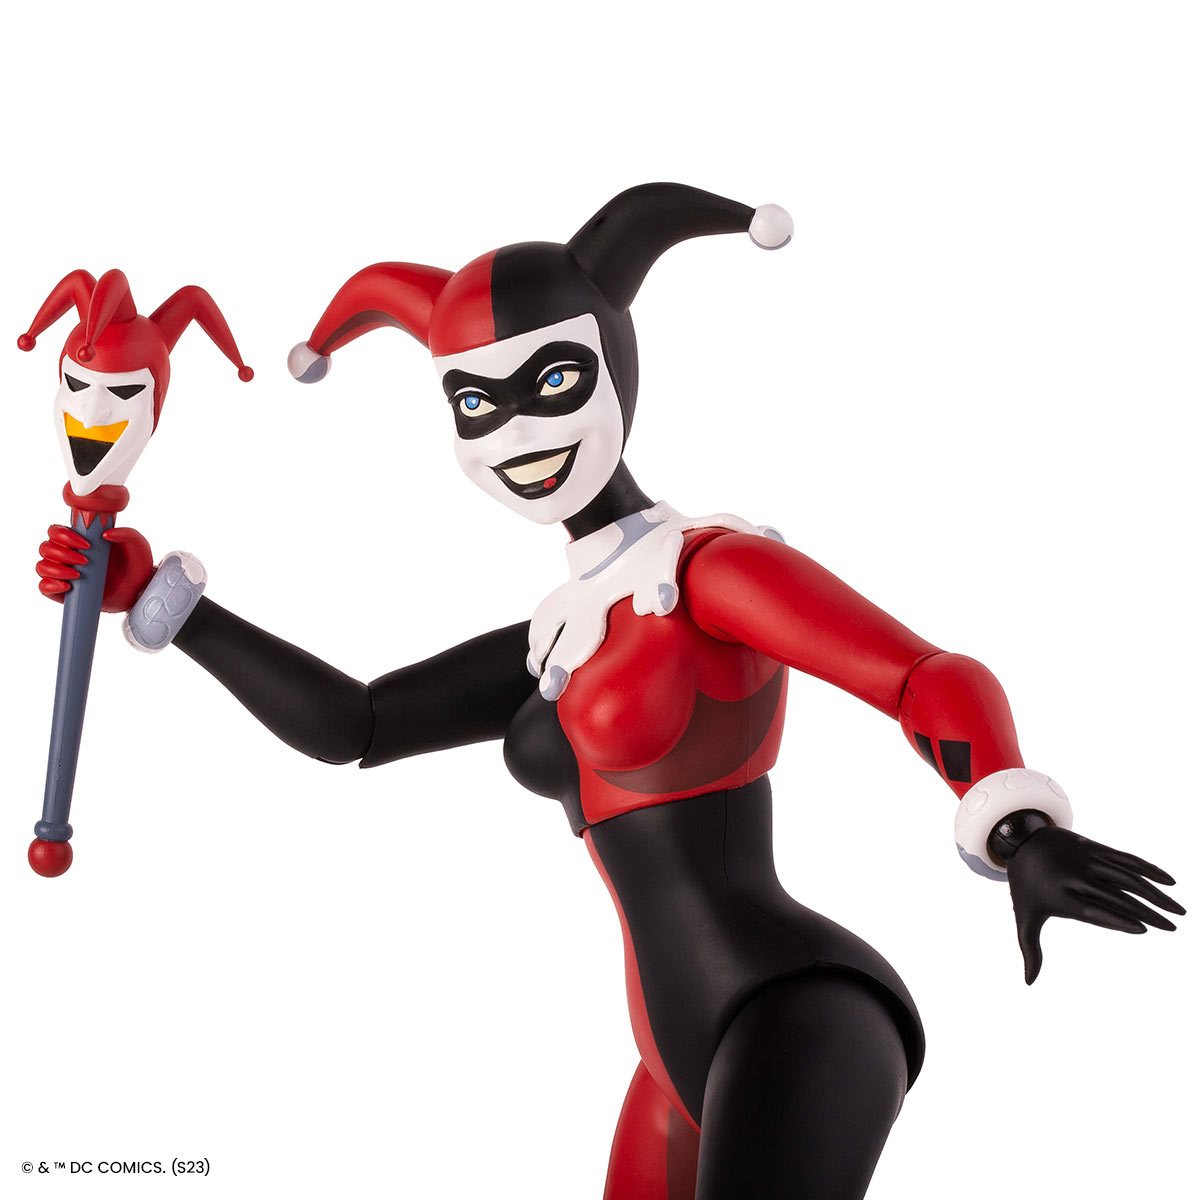 BATMAN: THE ANIMATED SERIES Harley Quinn 1/6 Scale Figure